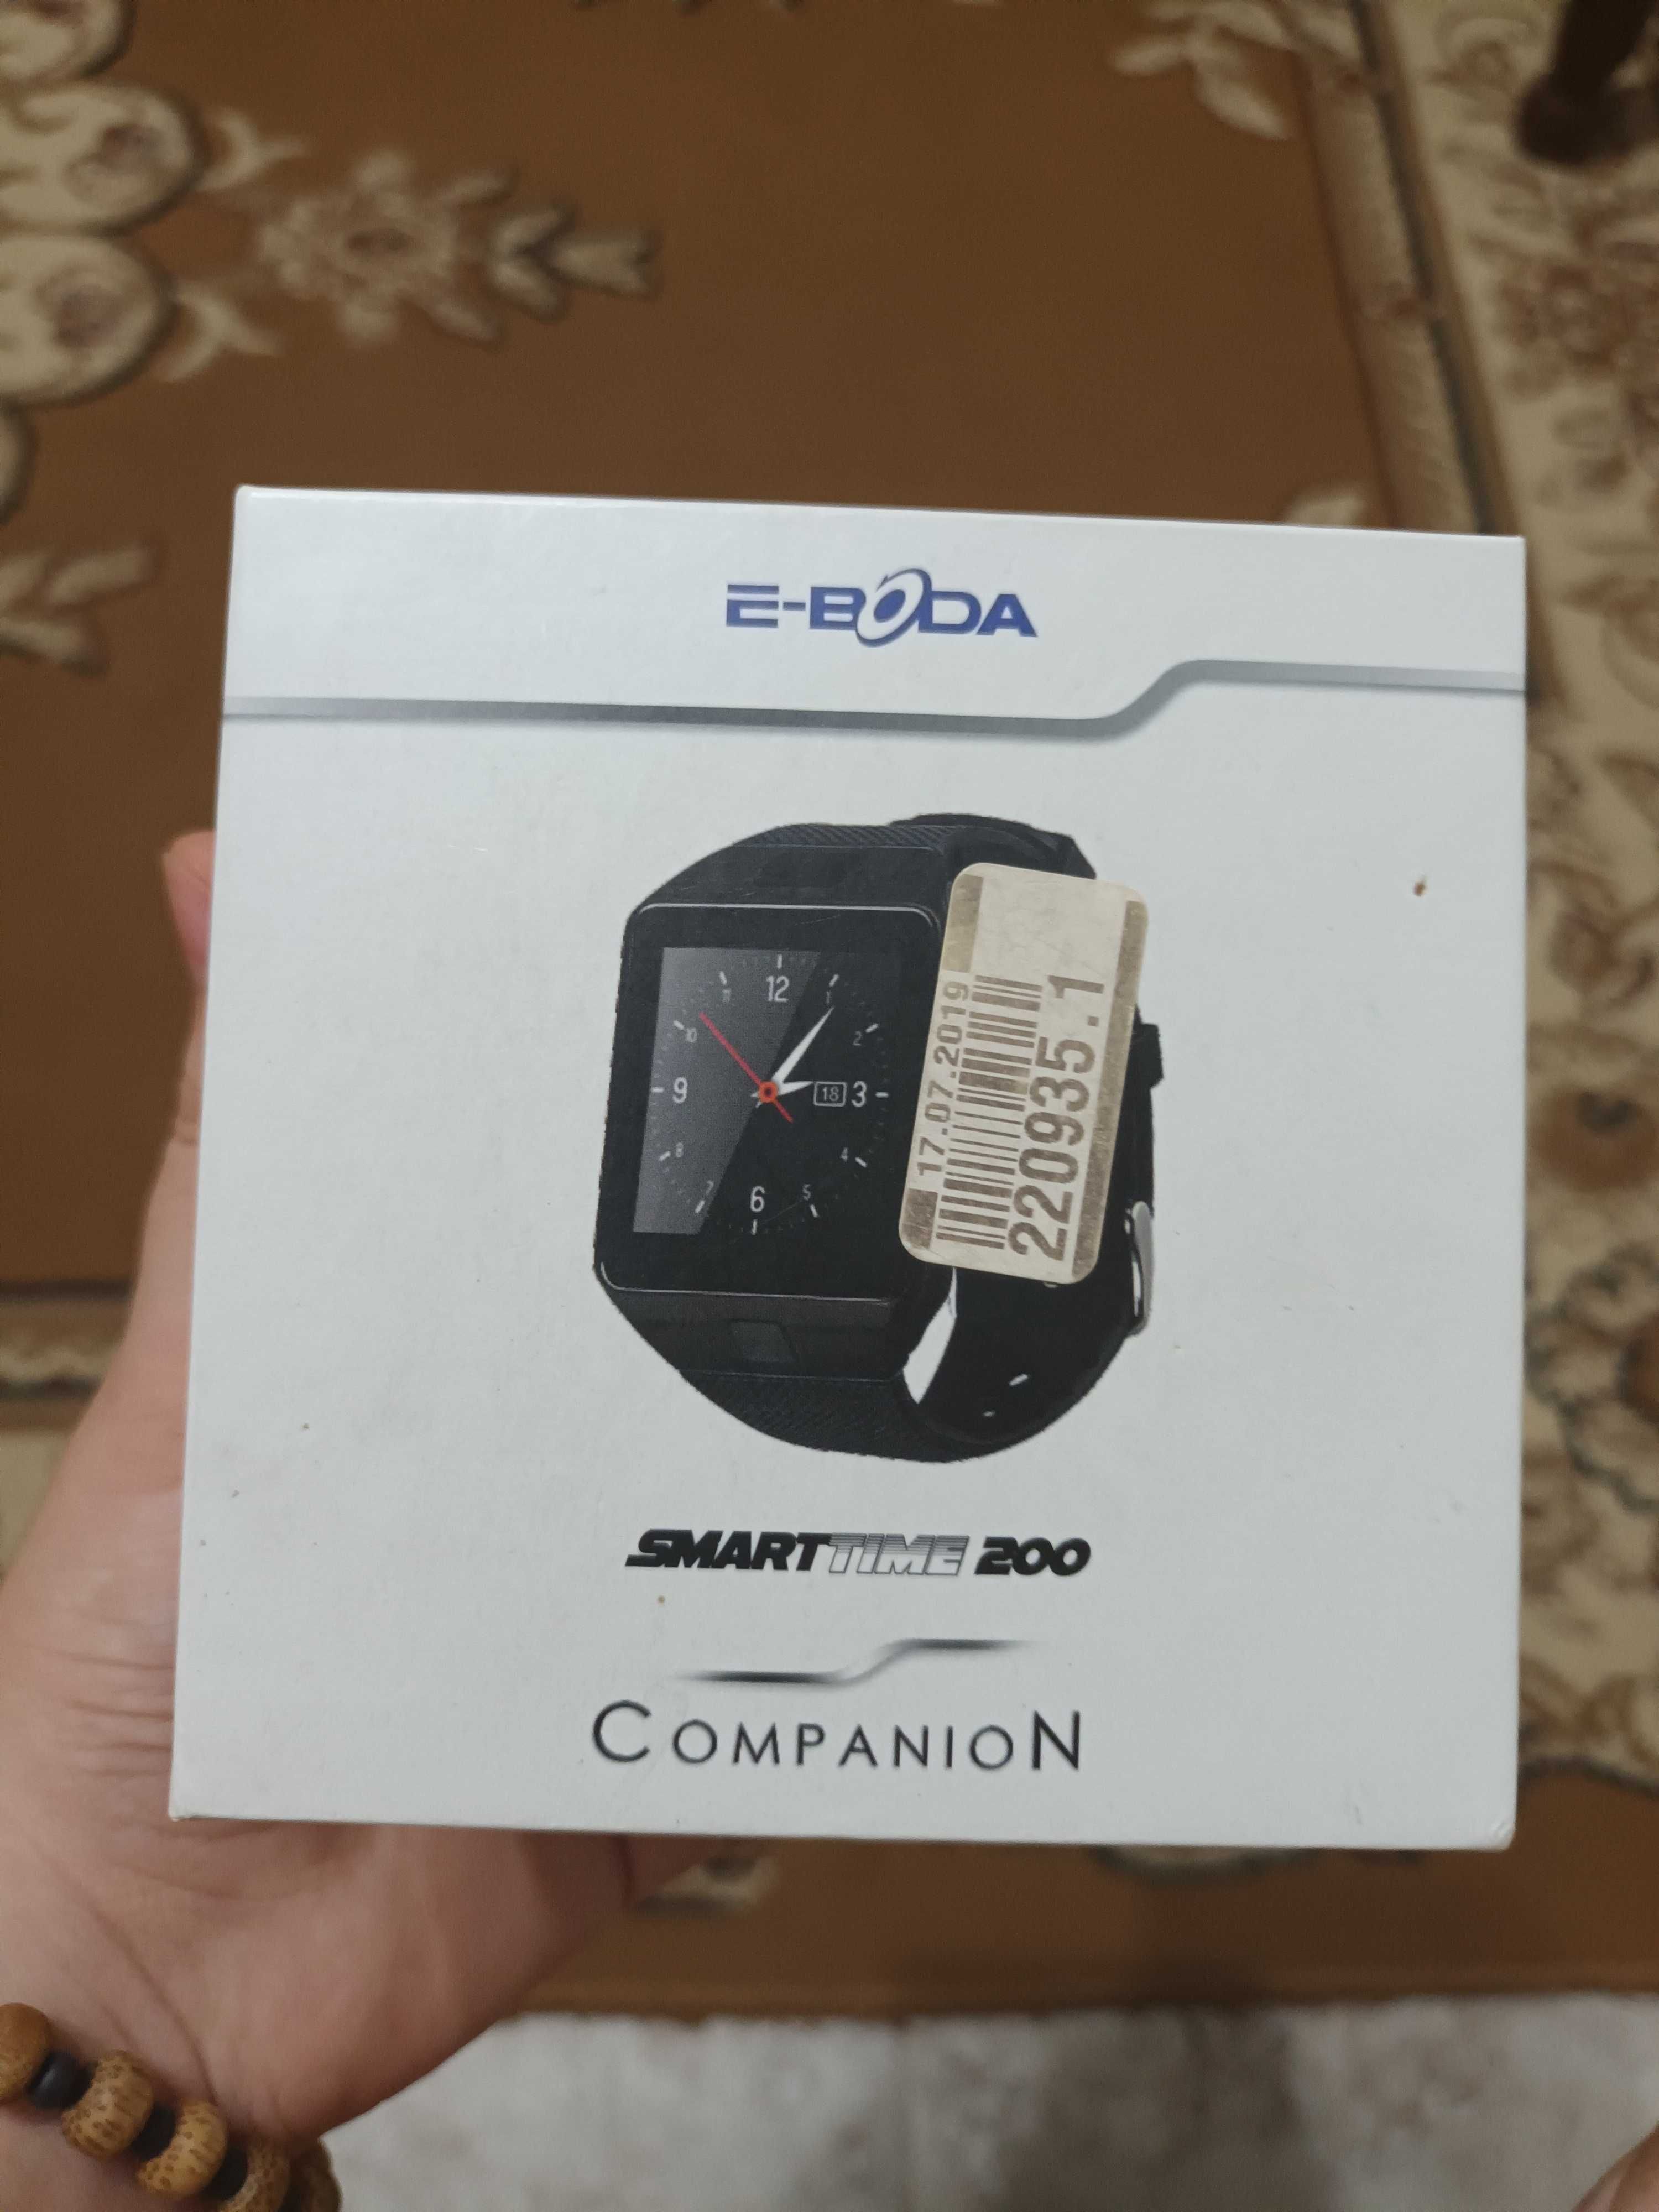 EBODA SMART TIME 200 Companion